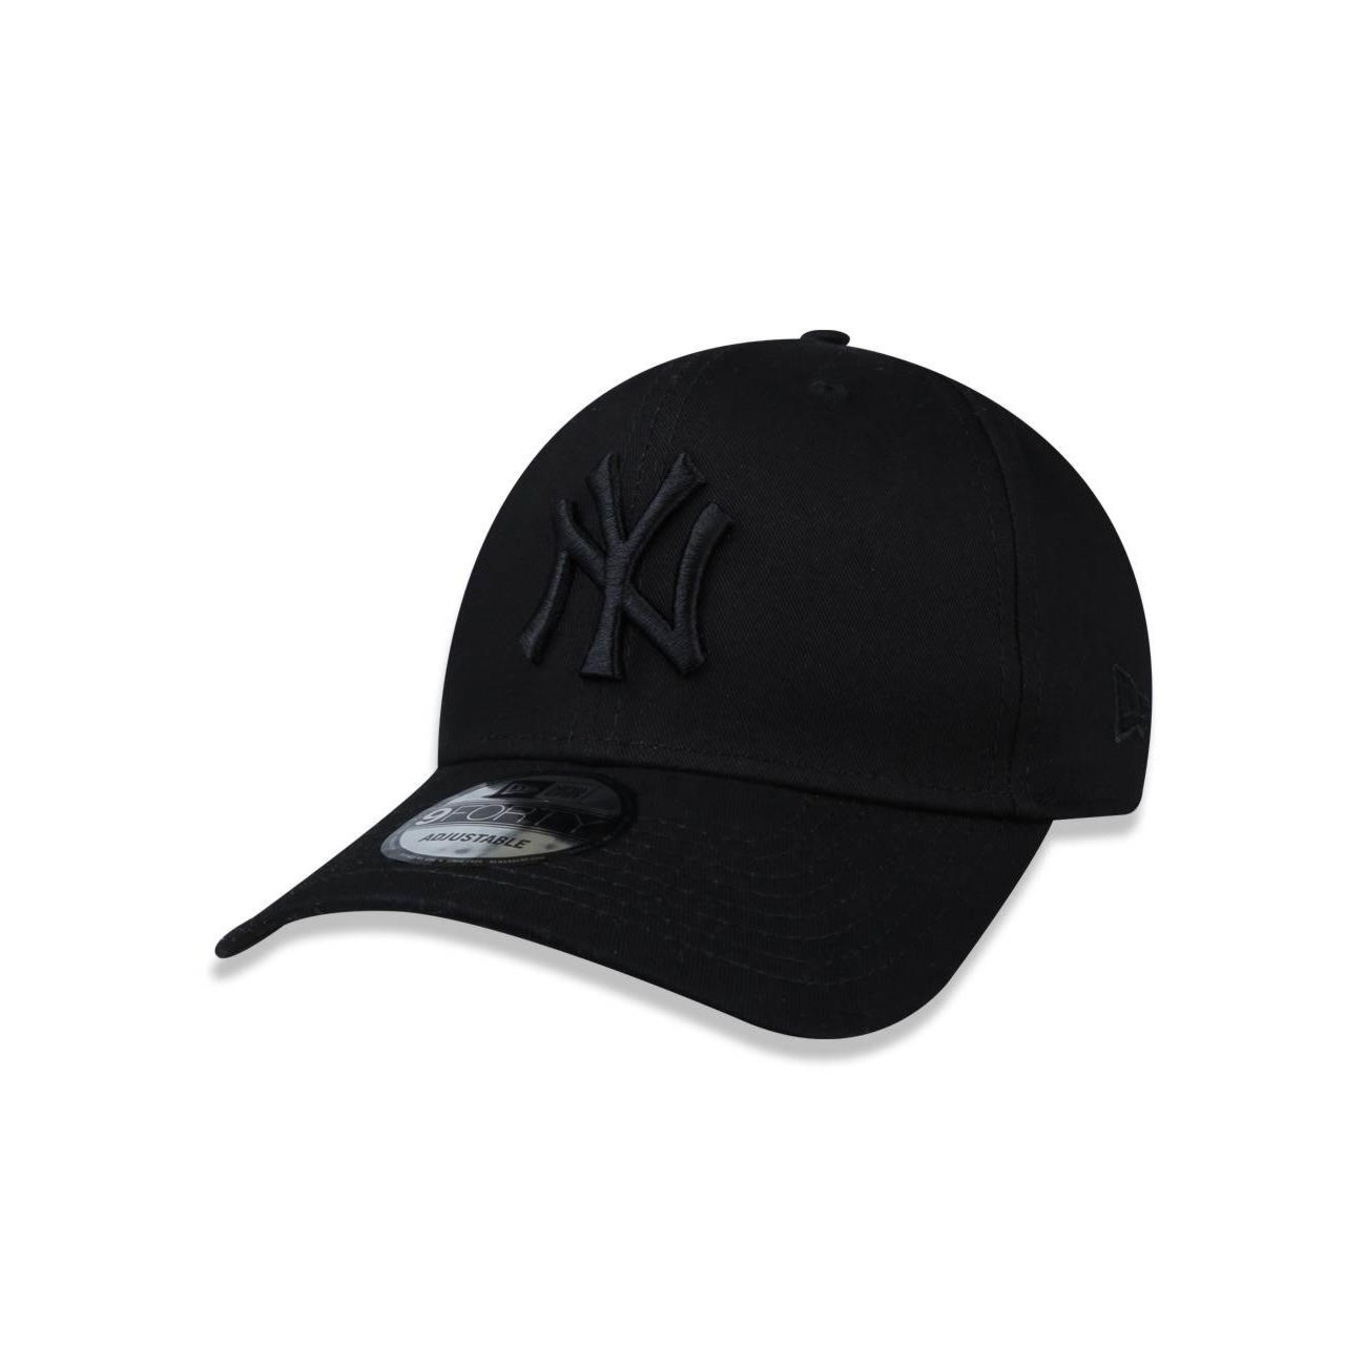 Boné New York Yankees MLB Aba Curva New Era 940 Snapback - Adulto - Foto 1